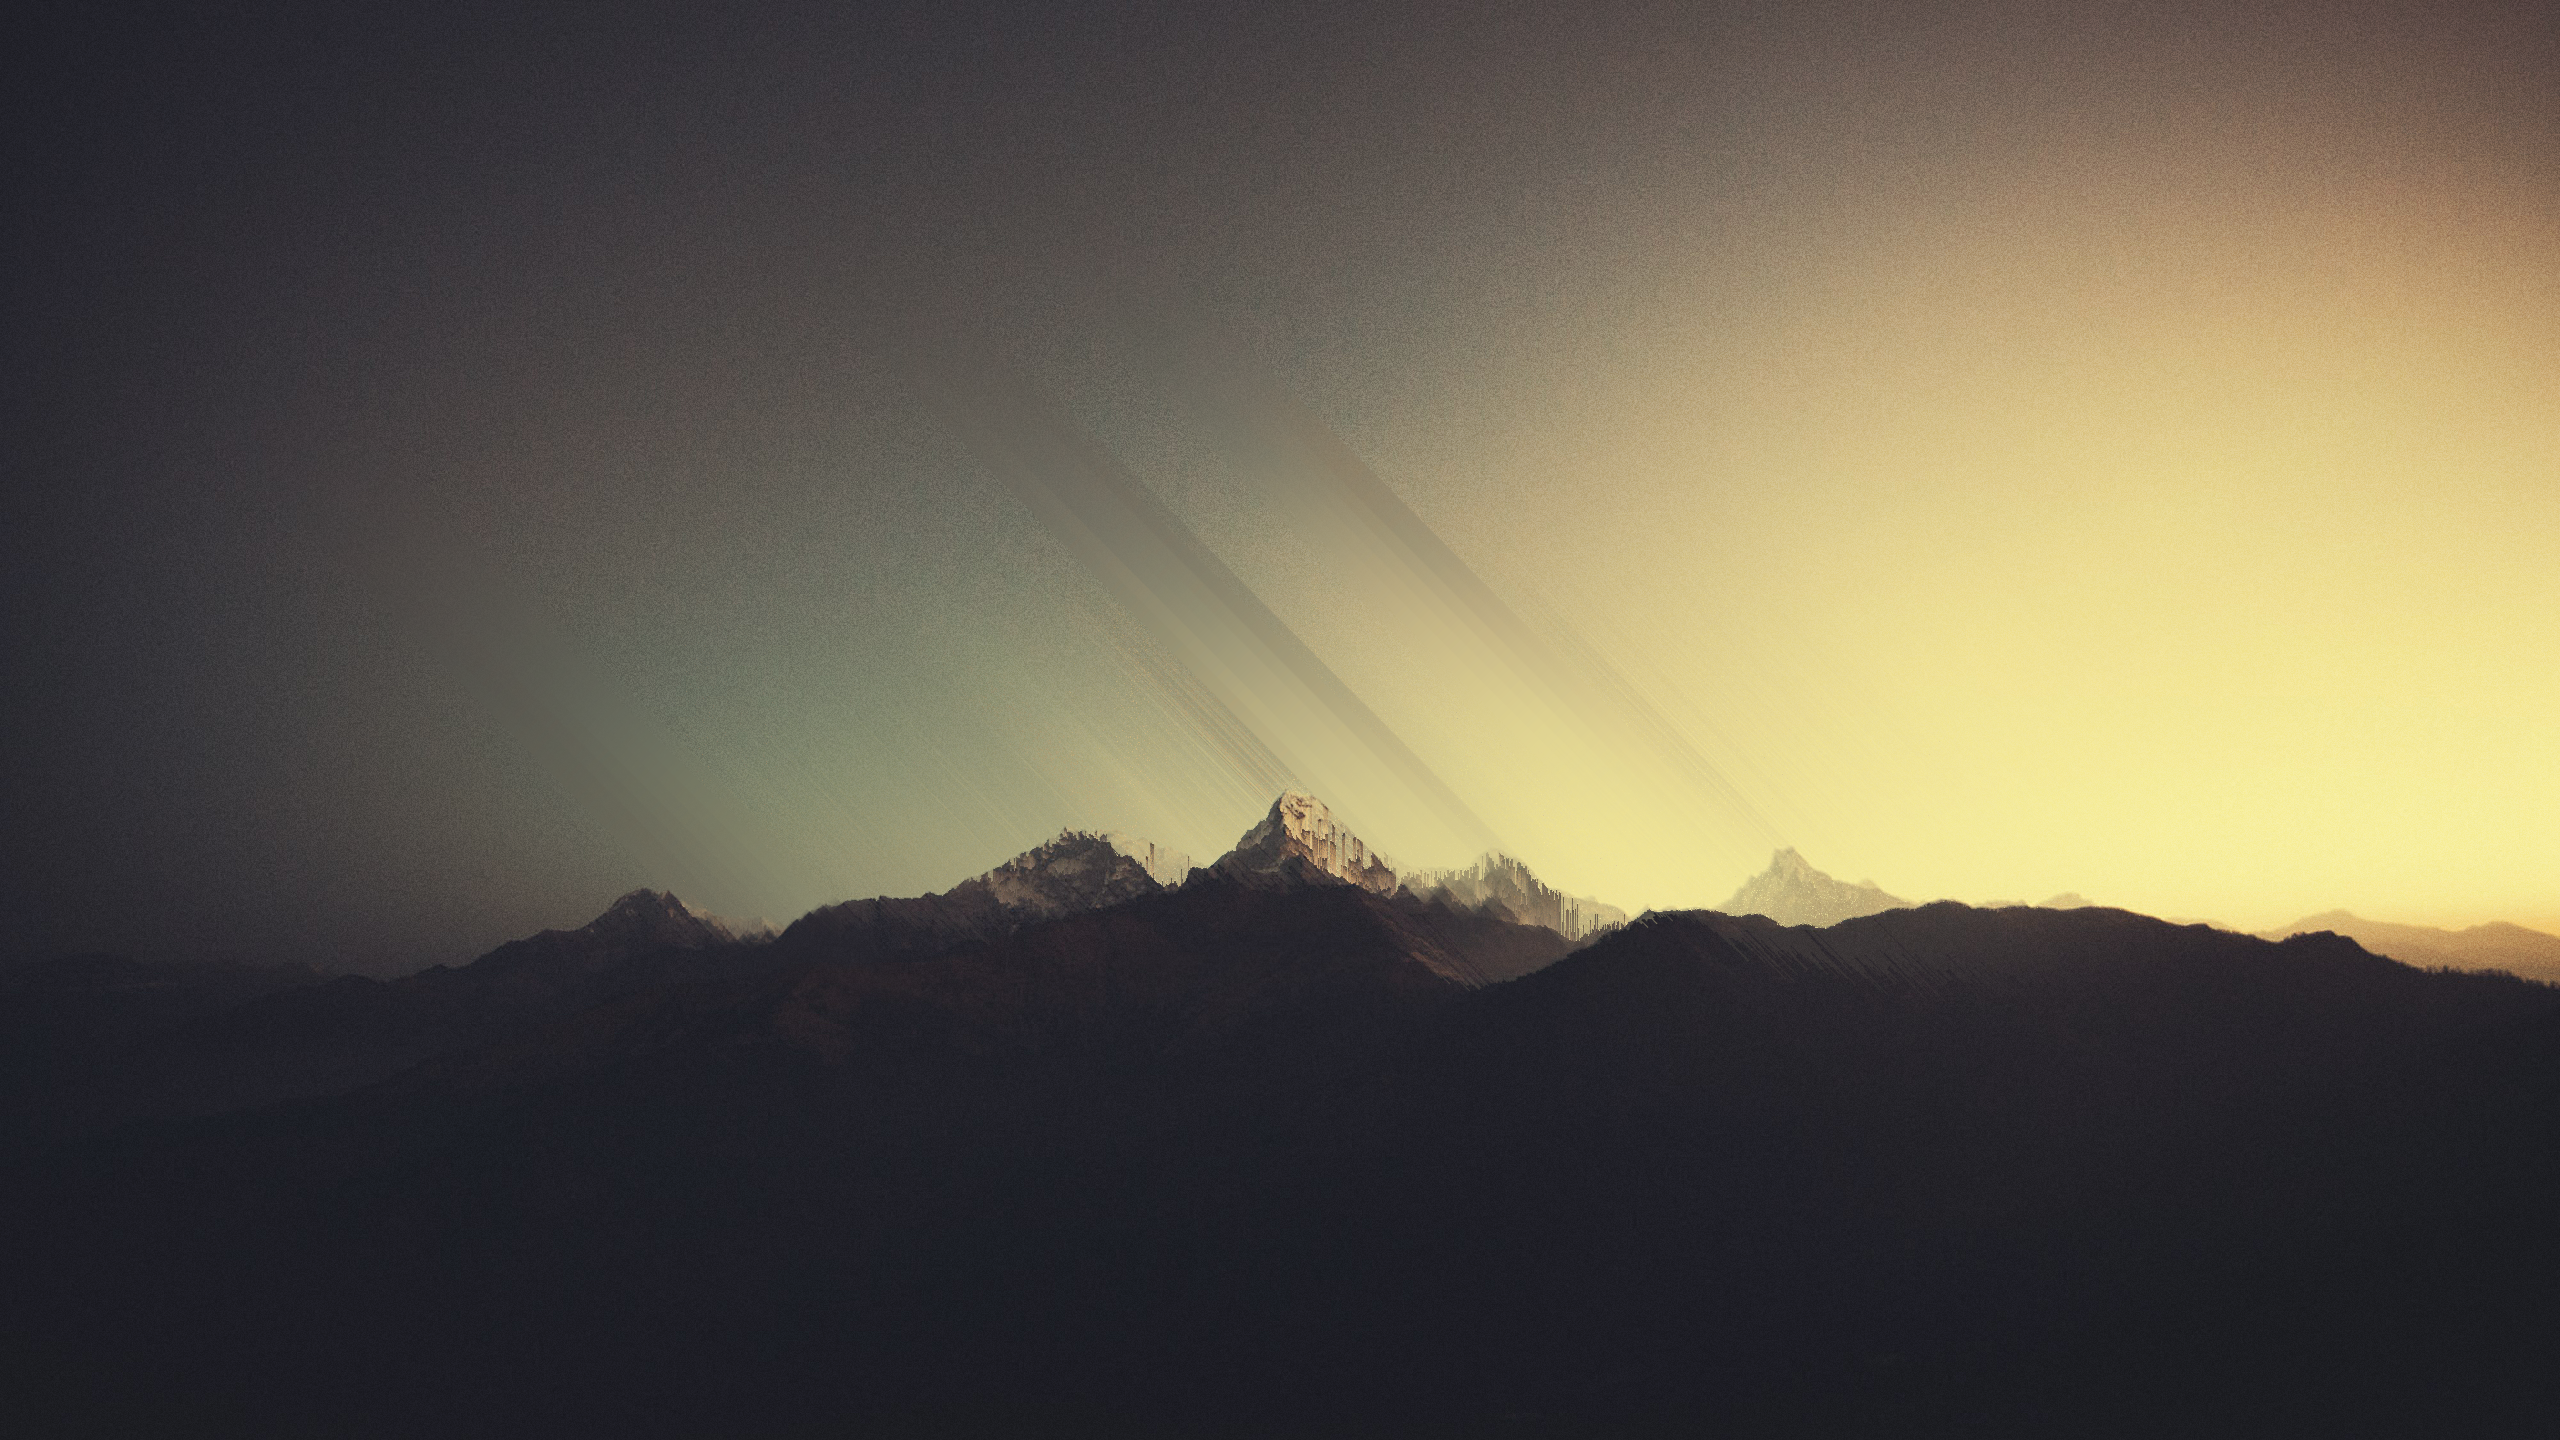 General 2560x1440 mountains dark simple background glitch art Annapurna Himalayas